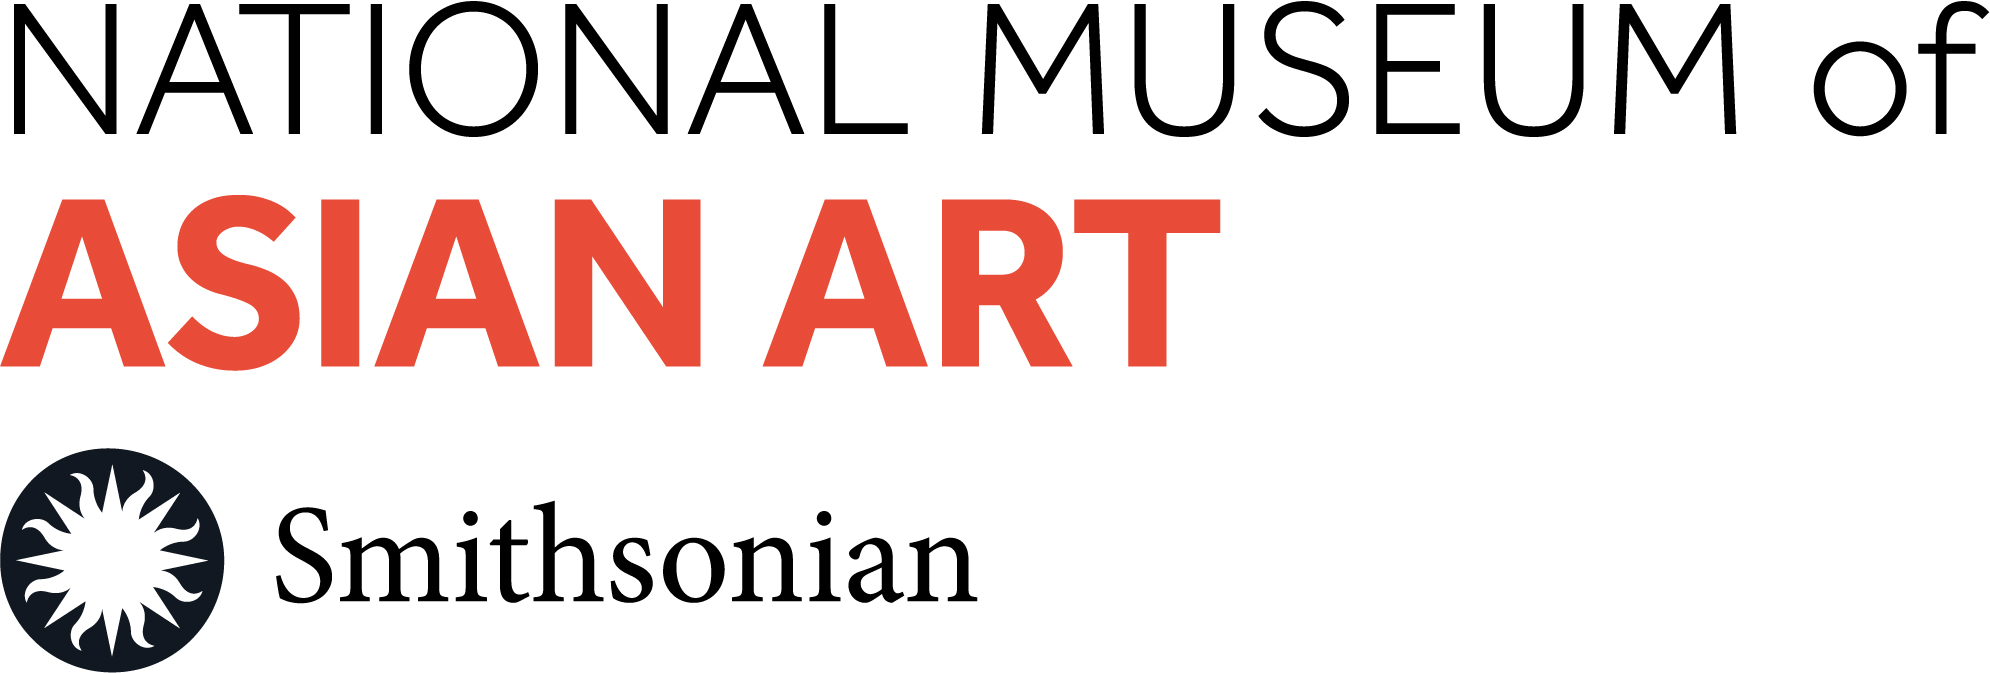 Smithsonian's National Museum of Asian Art logo